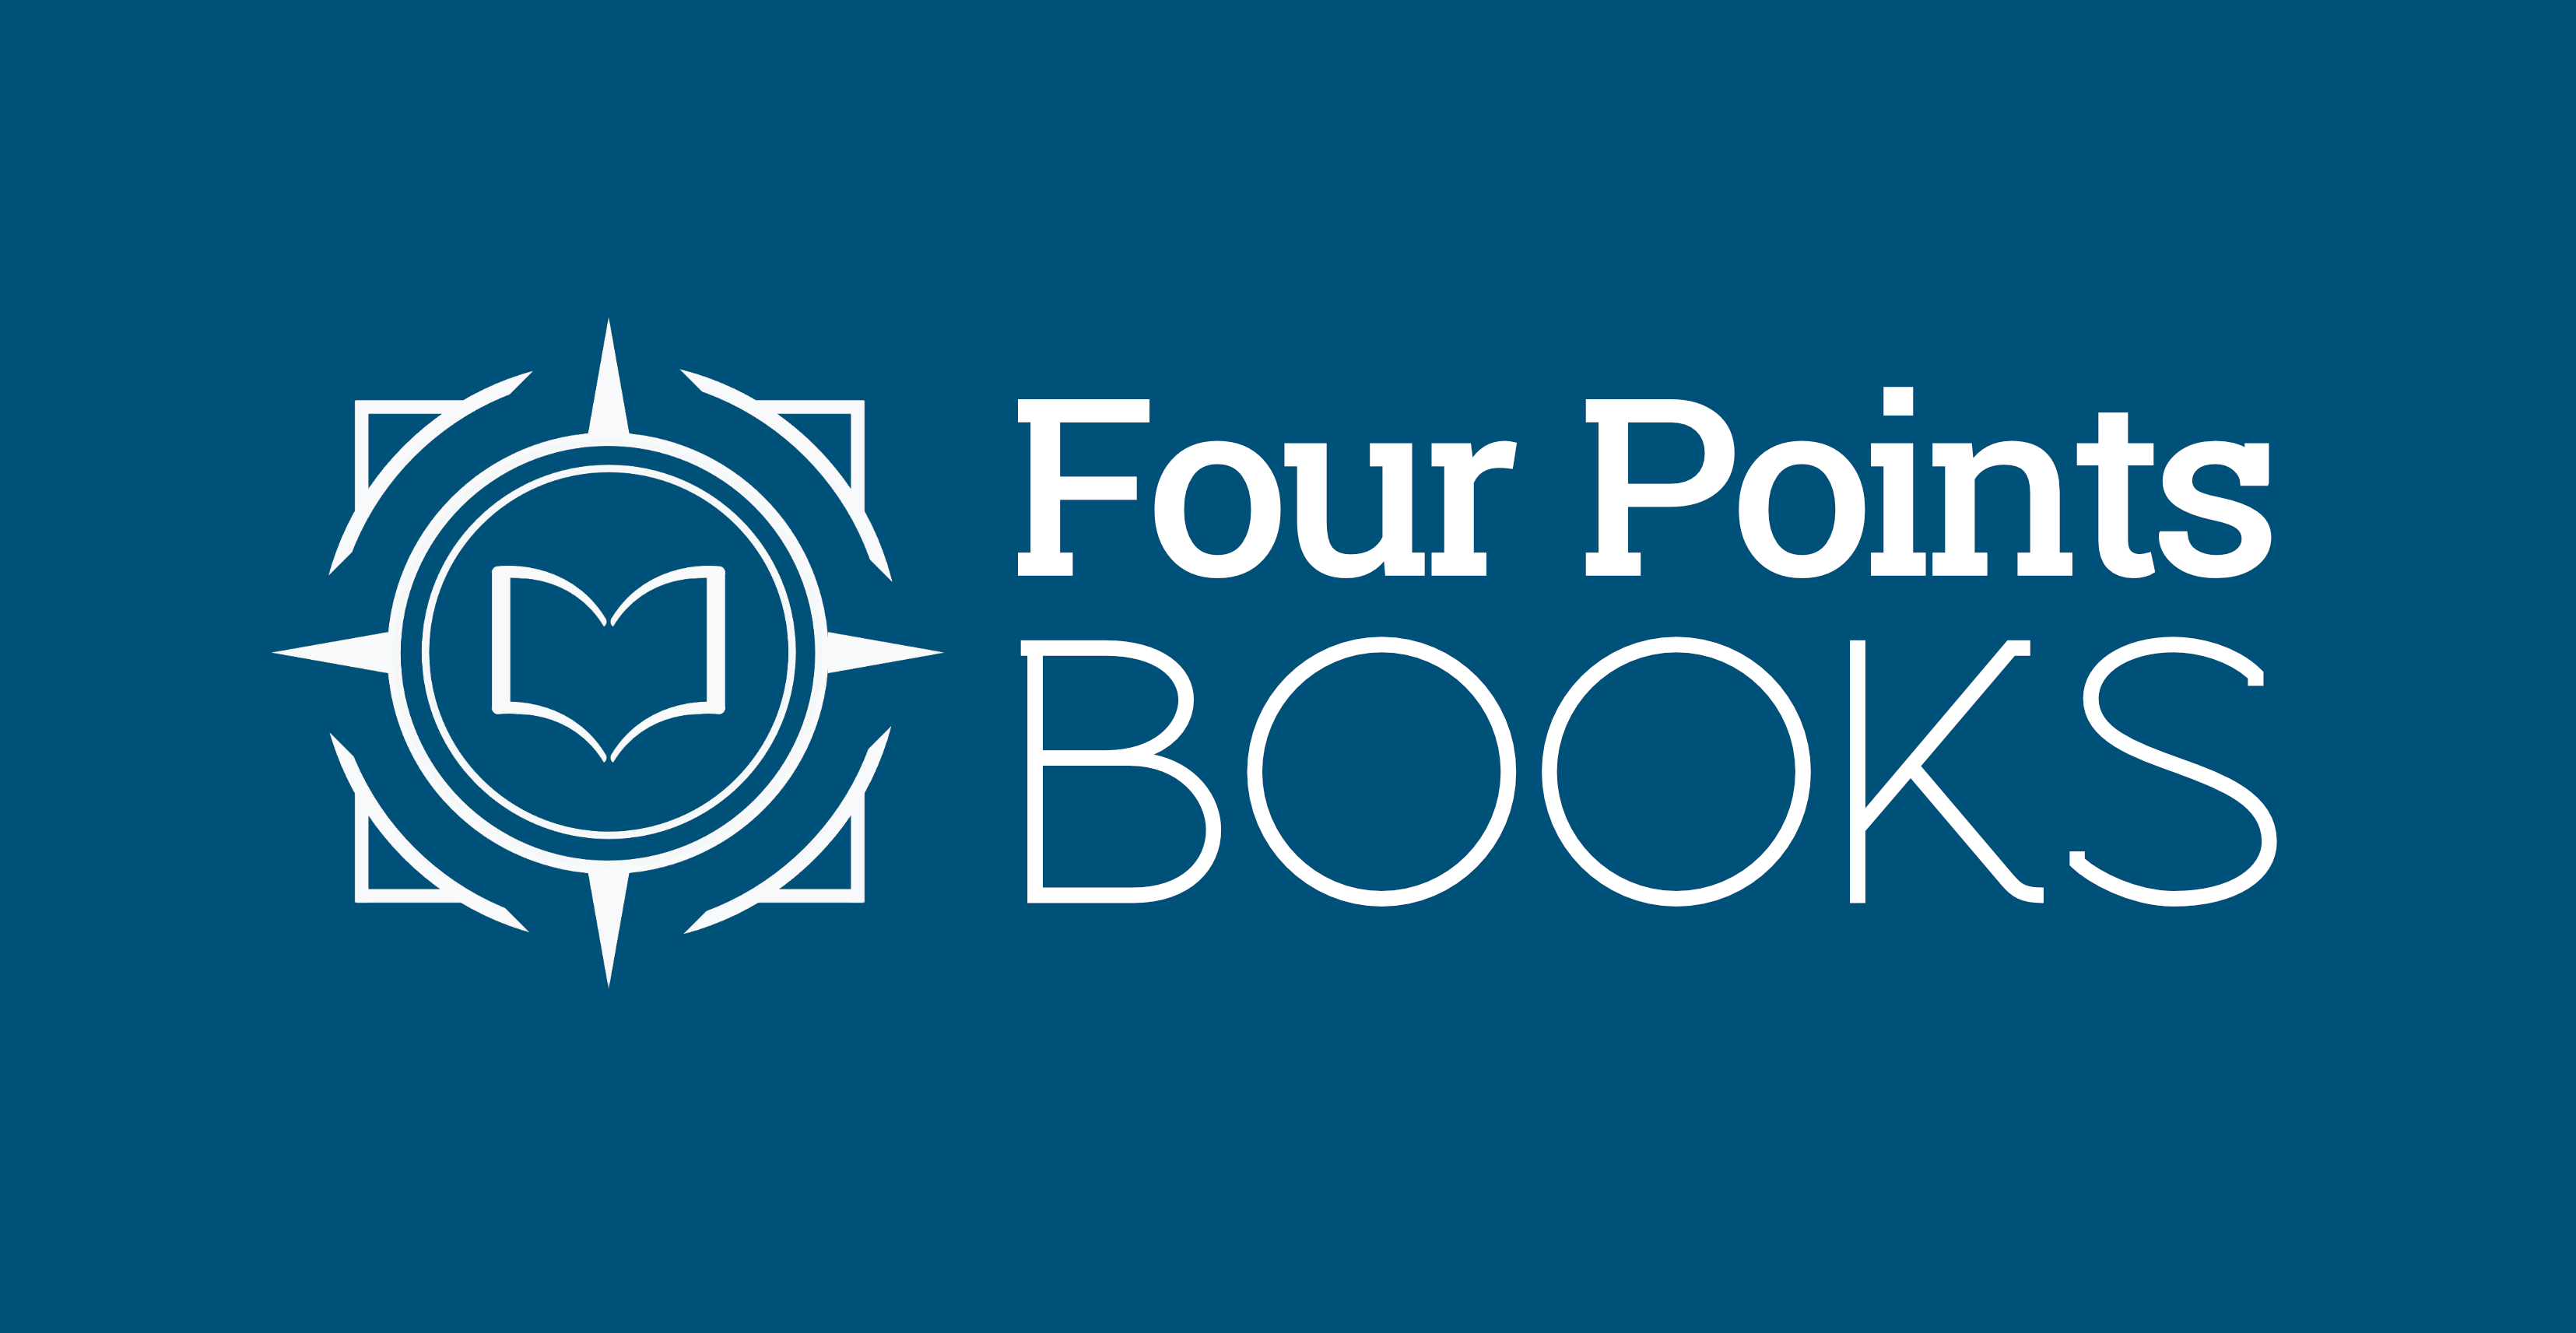 Four Points Books